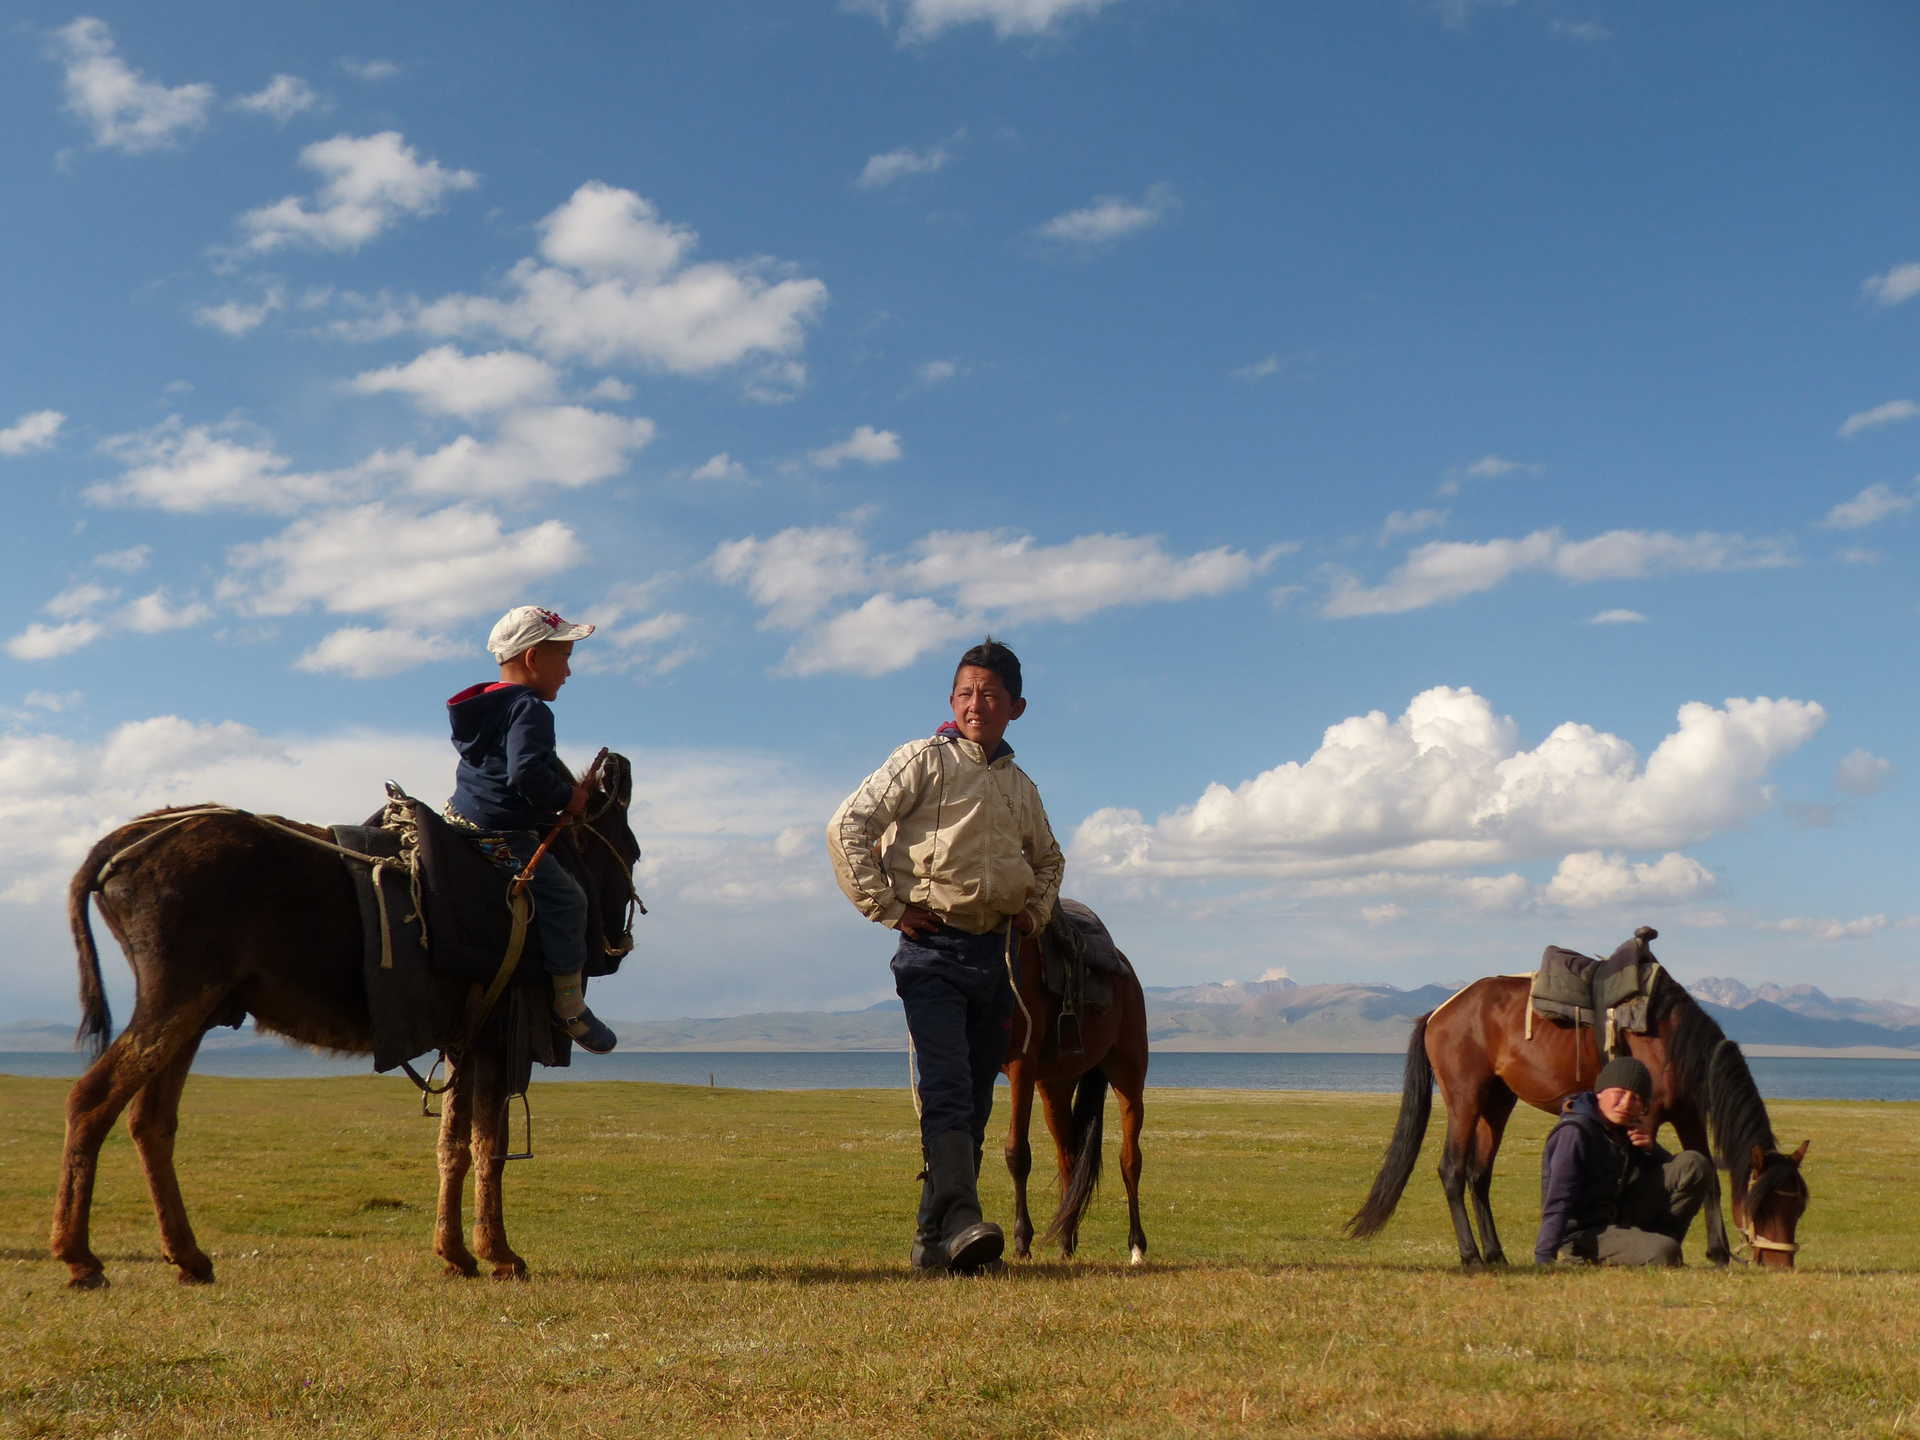 jeunes cavaliers kirghiz au lac Son Kul